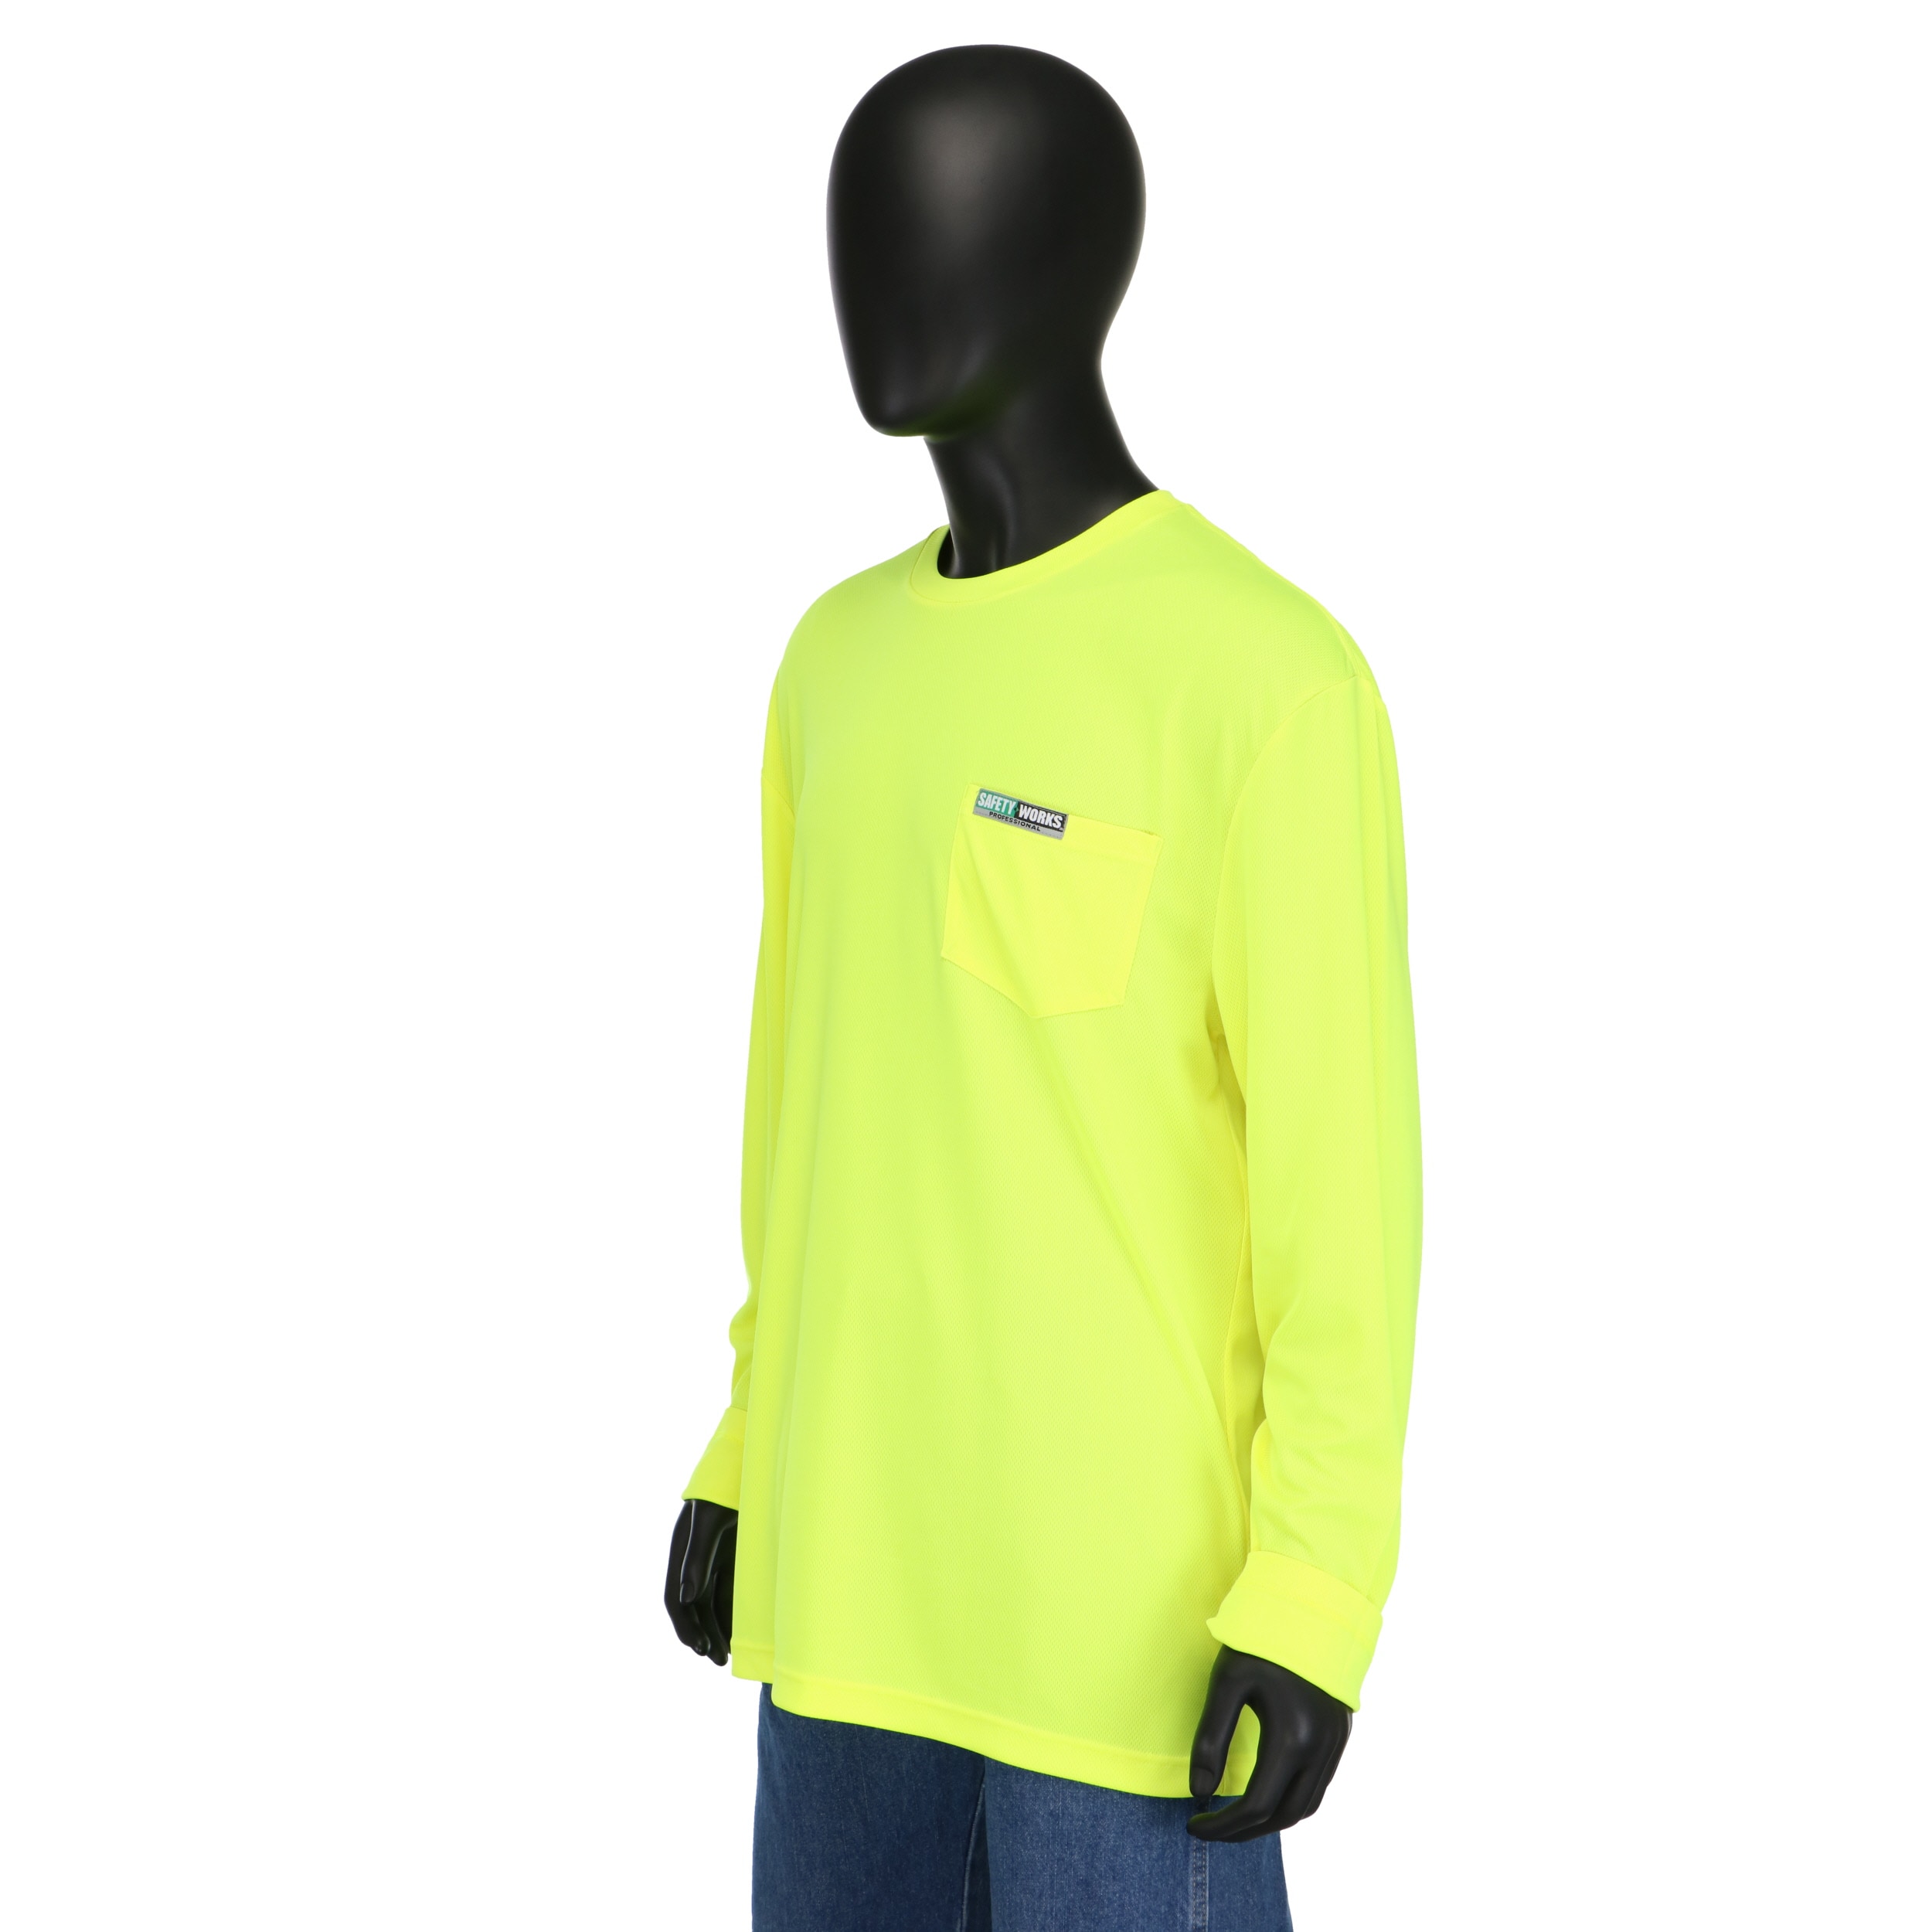 Nike Men's Sportswear T-Shirt Safty Green